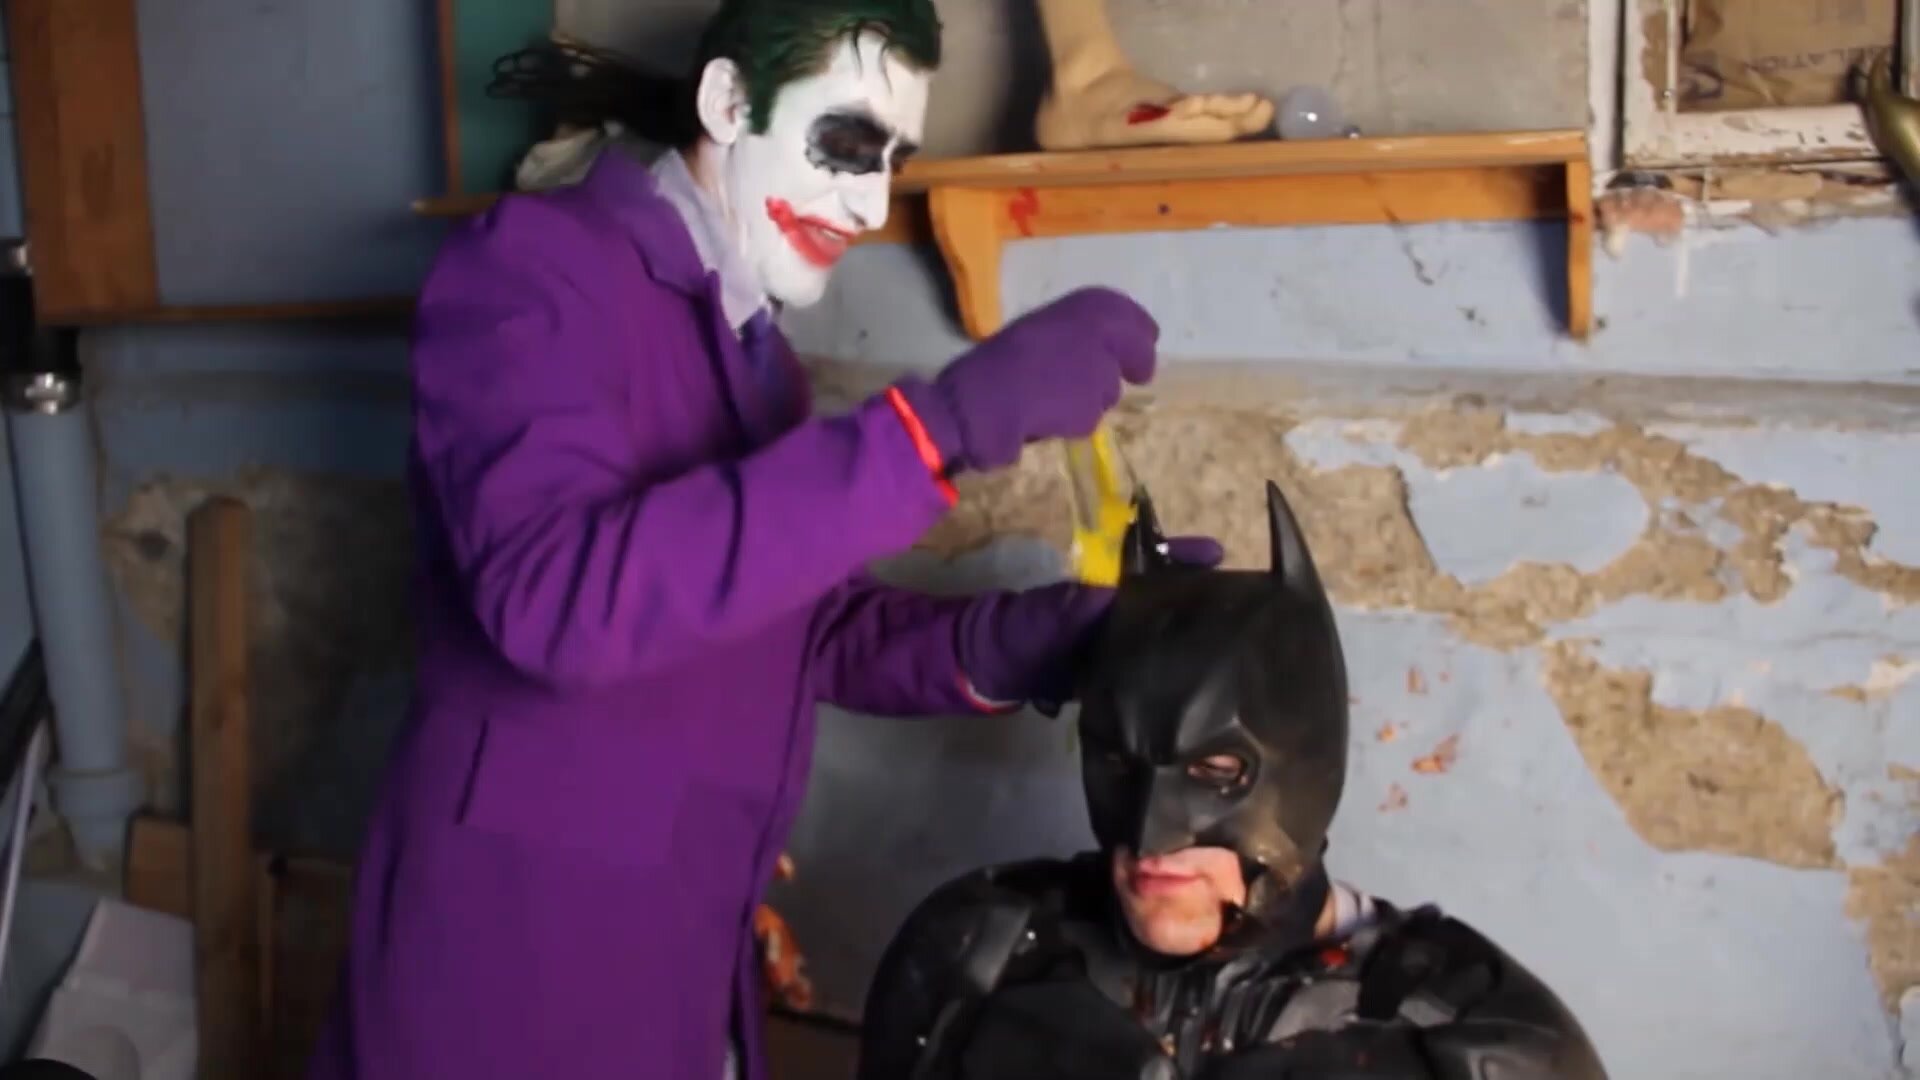 Batman and joker gay porn